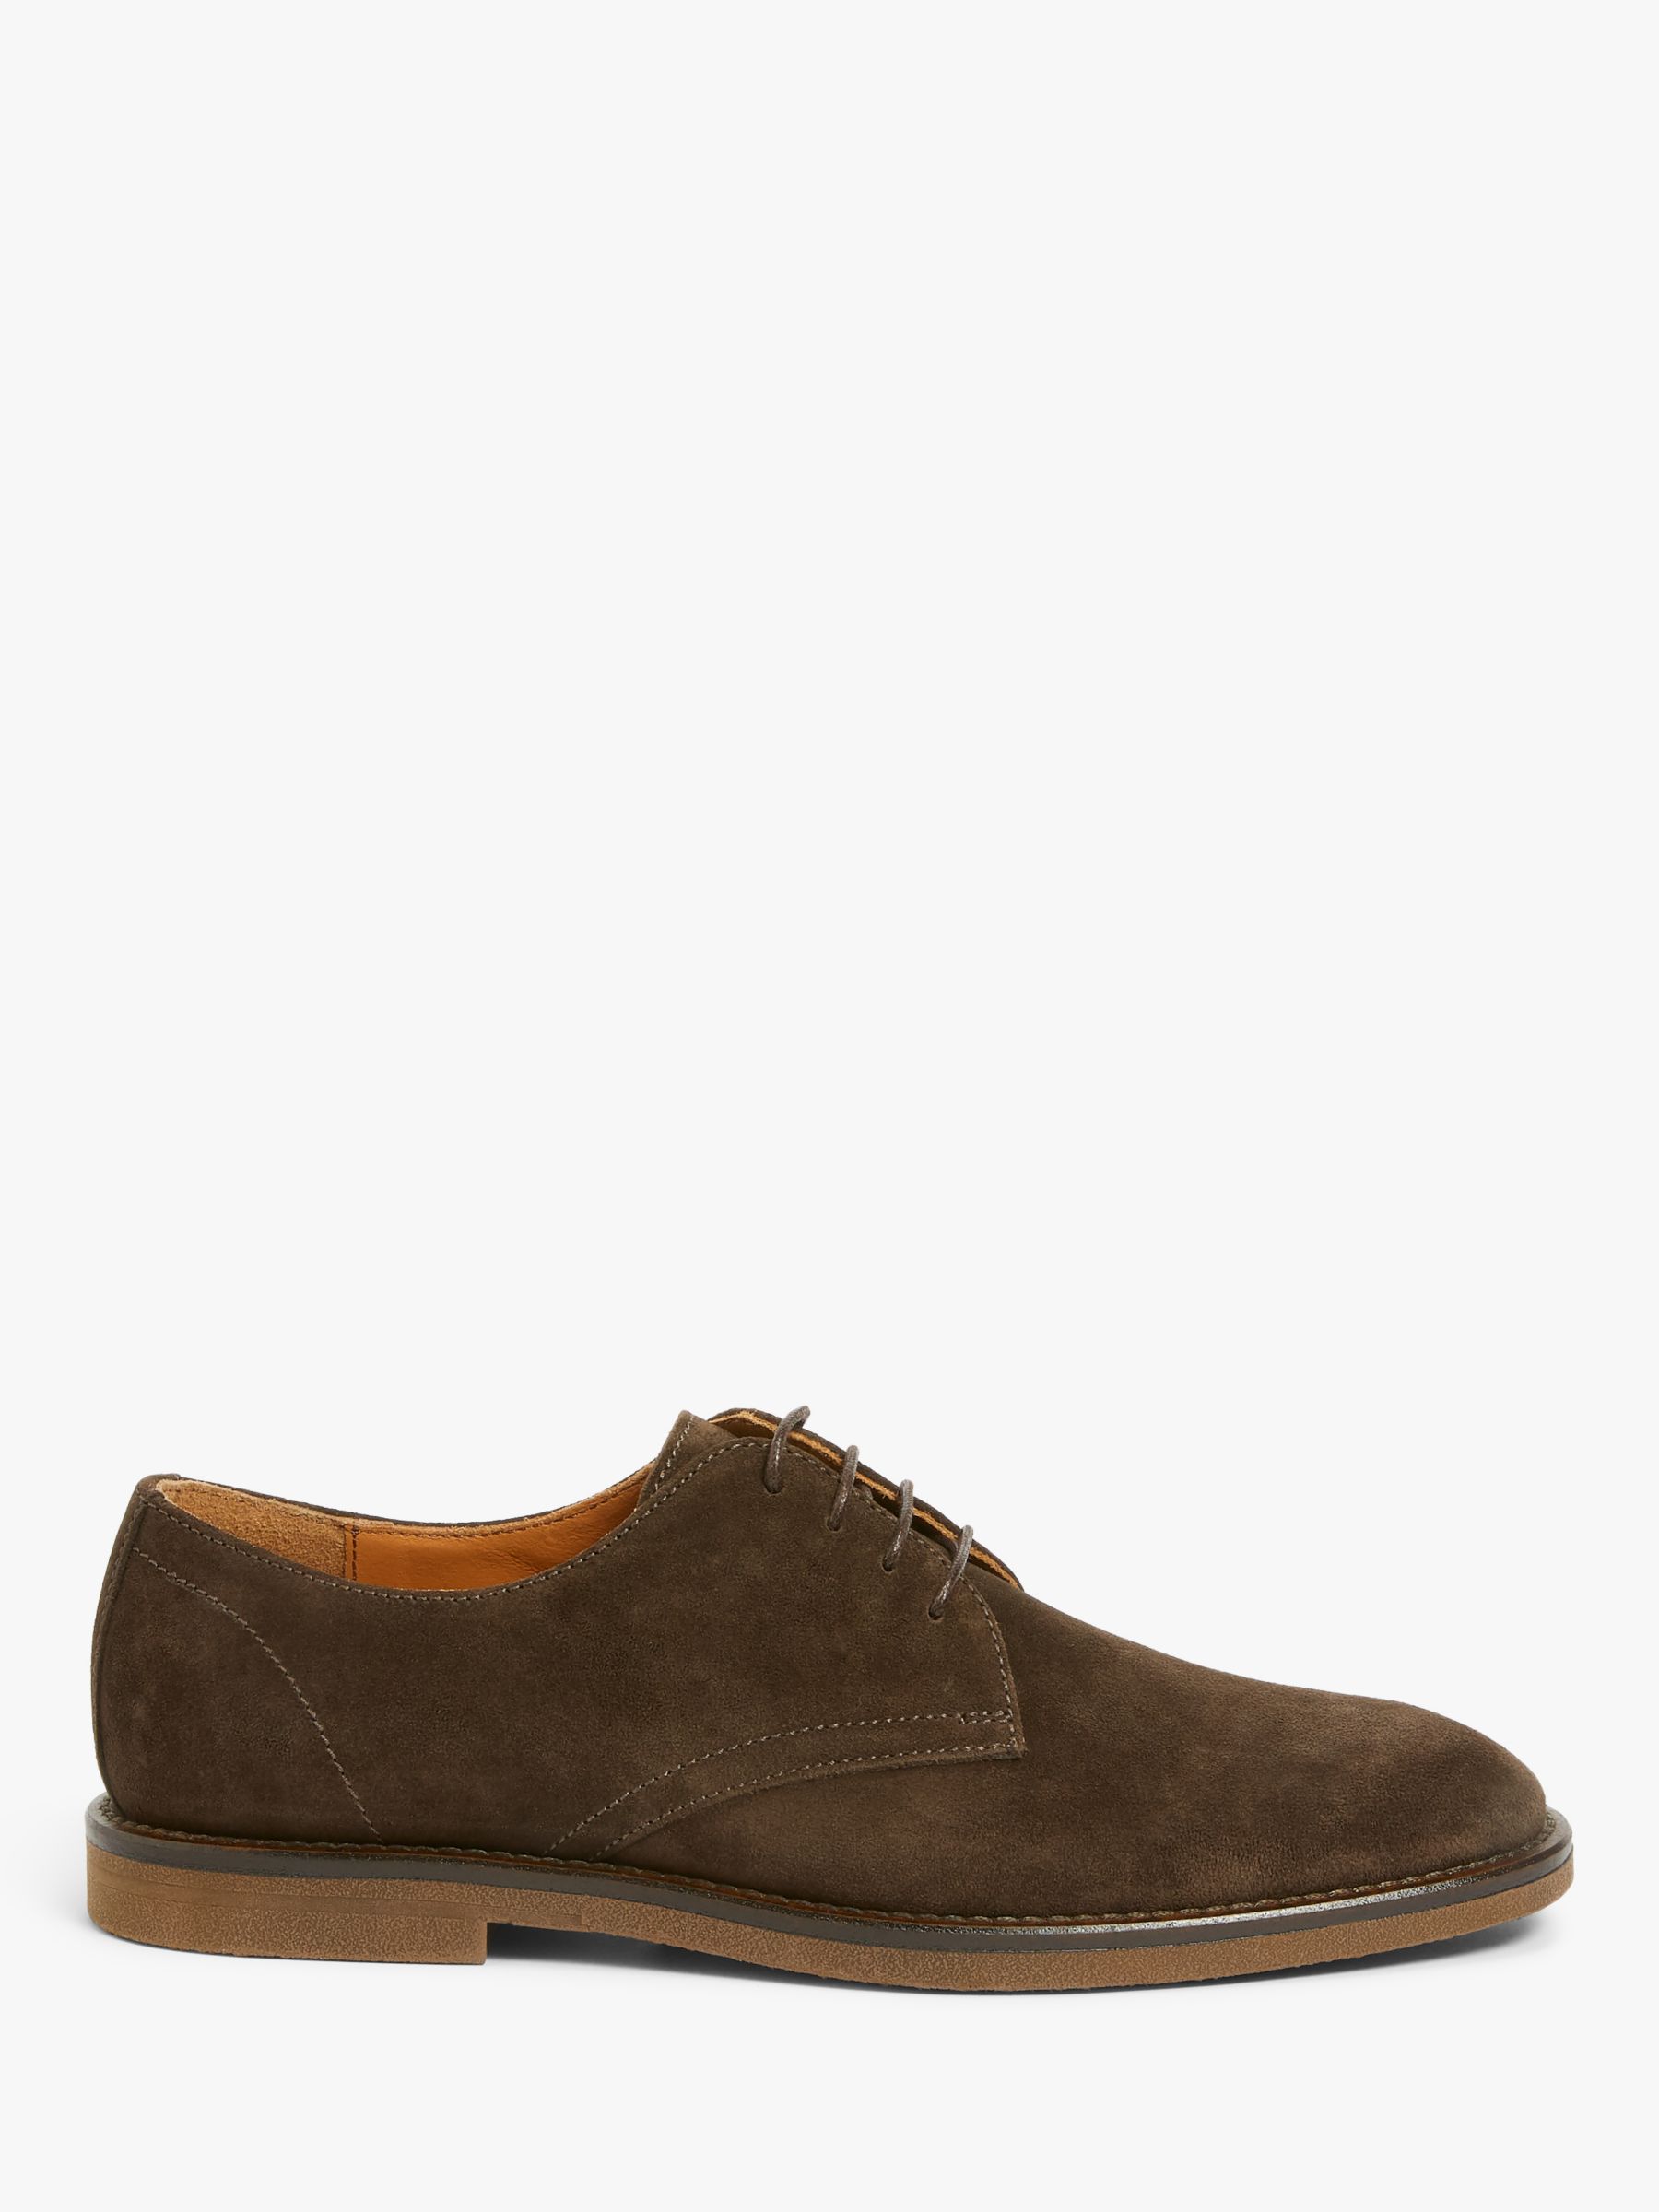 John Lewis Suede Derby Shoes, Brown